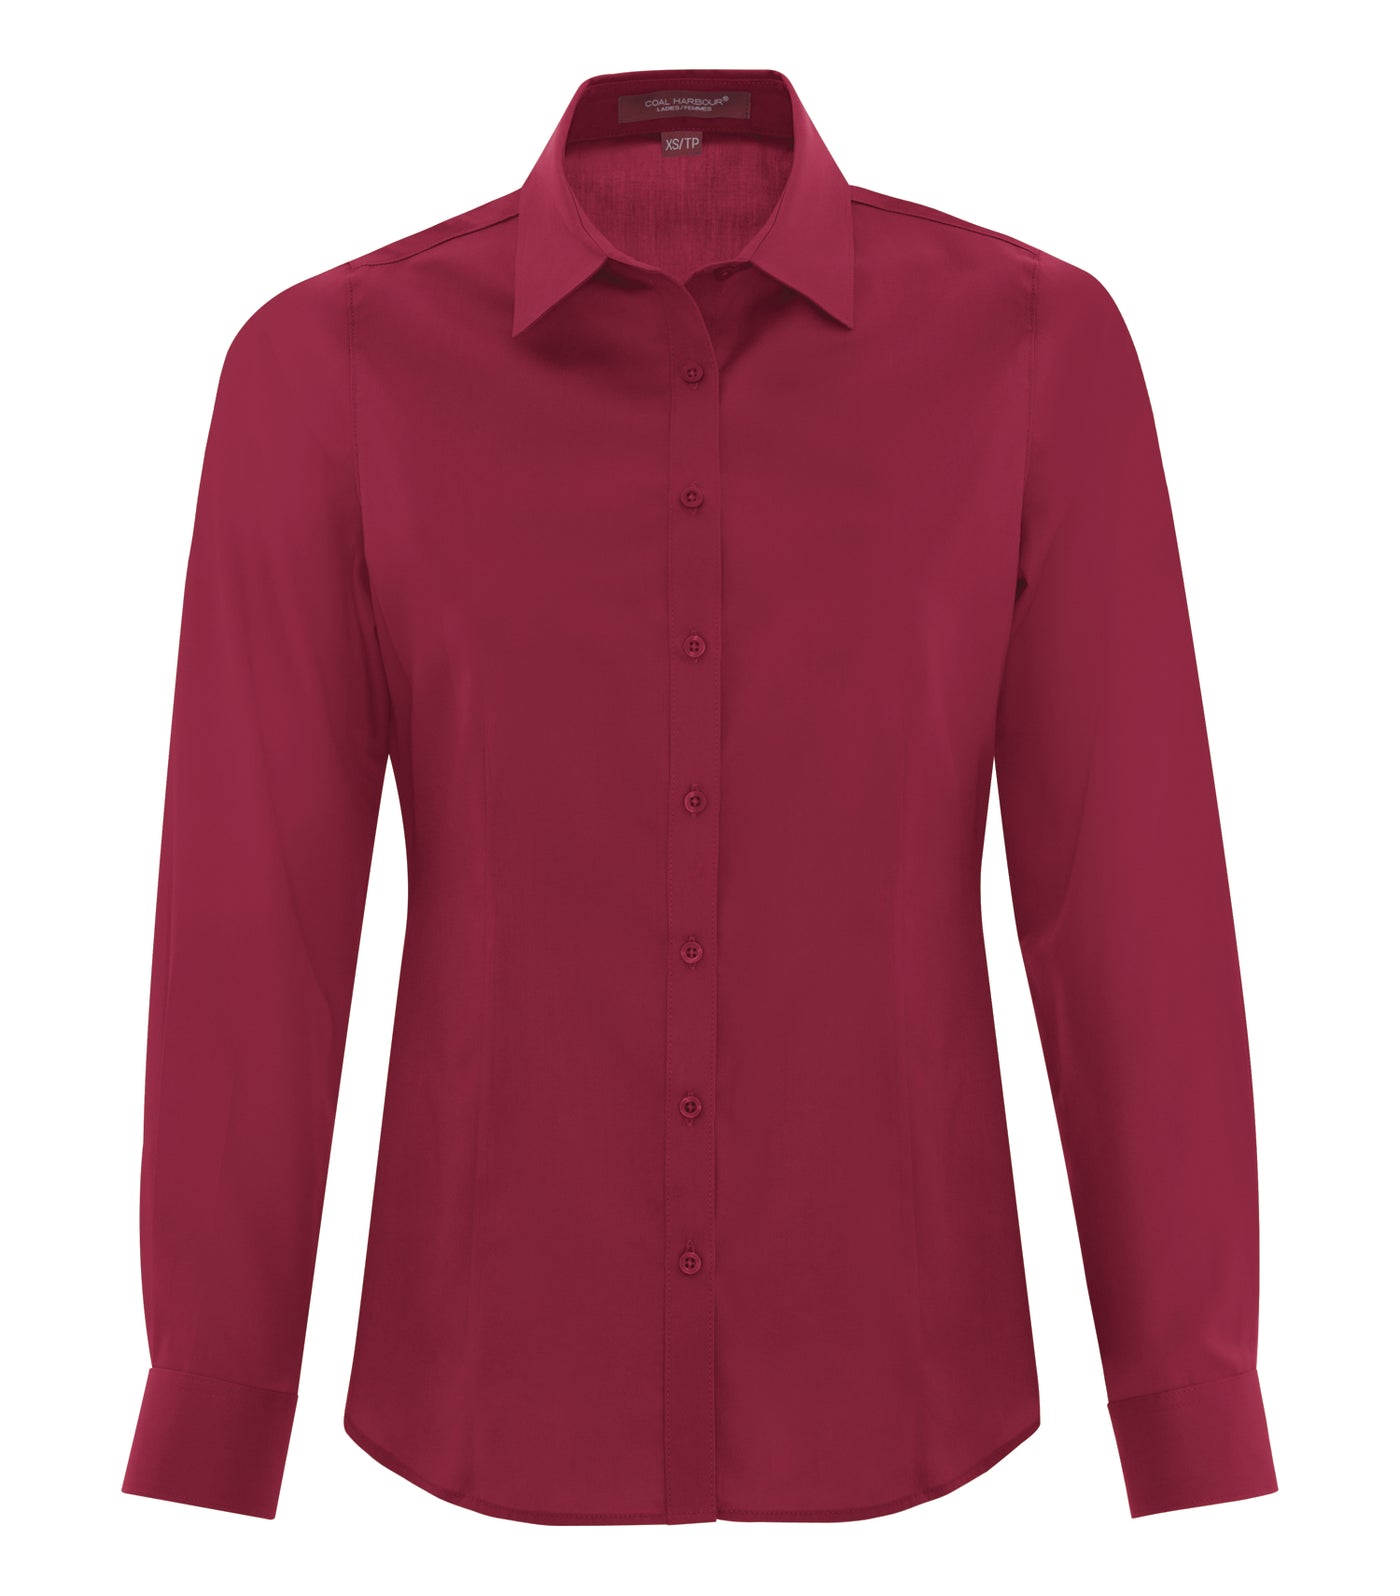 Rich Red - Coal Harbour Women's Long Sleeve Work Shirt